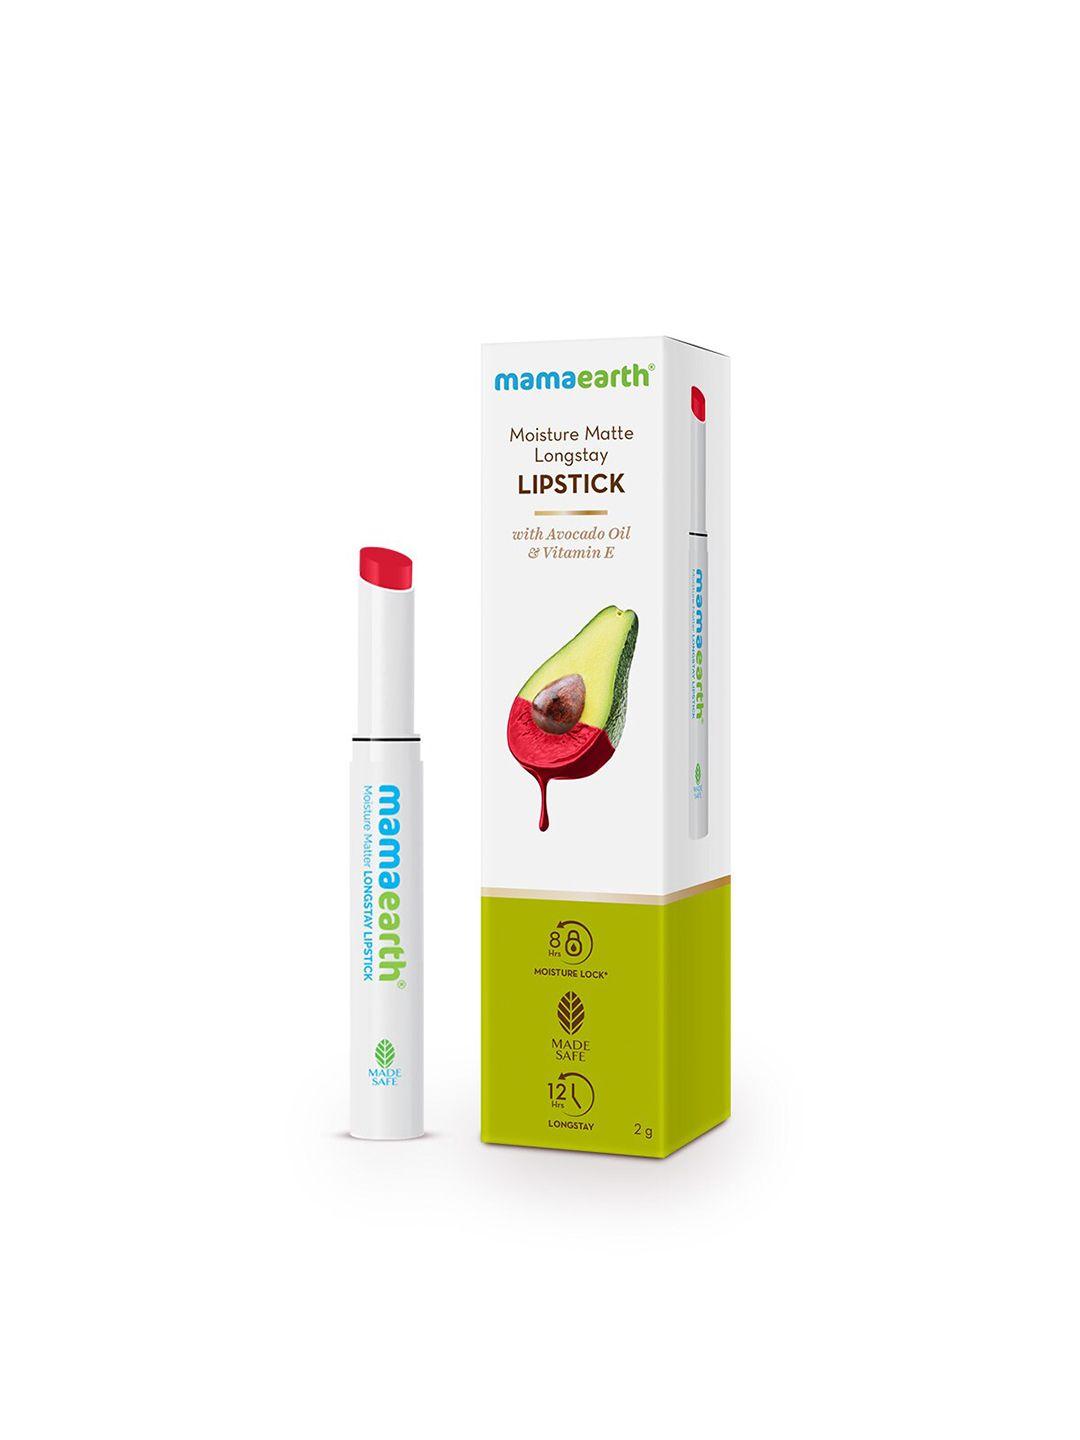 mamaearth moisture matte longstay lipstick with avocado oil & vit e 2g - grapefruit 15